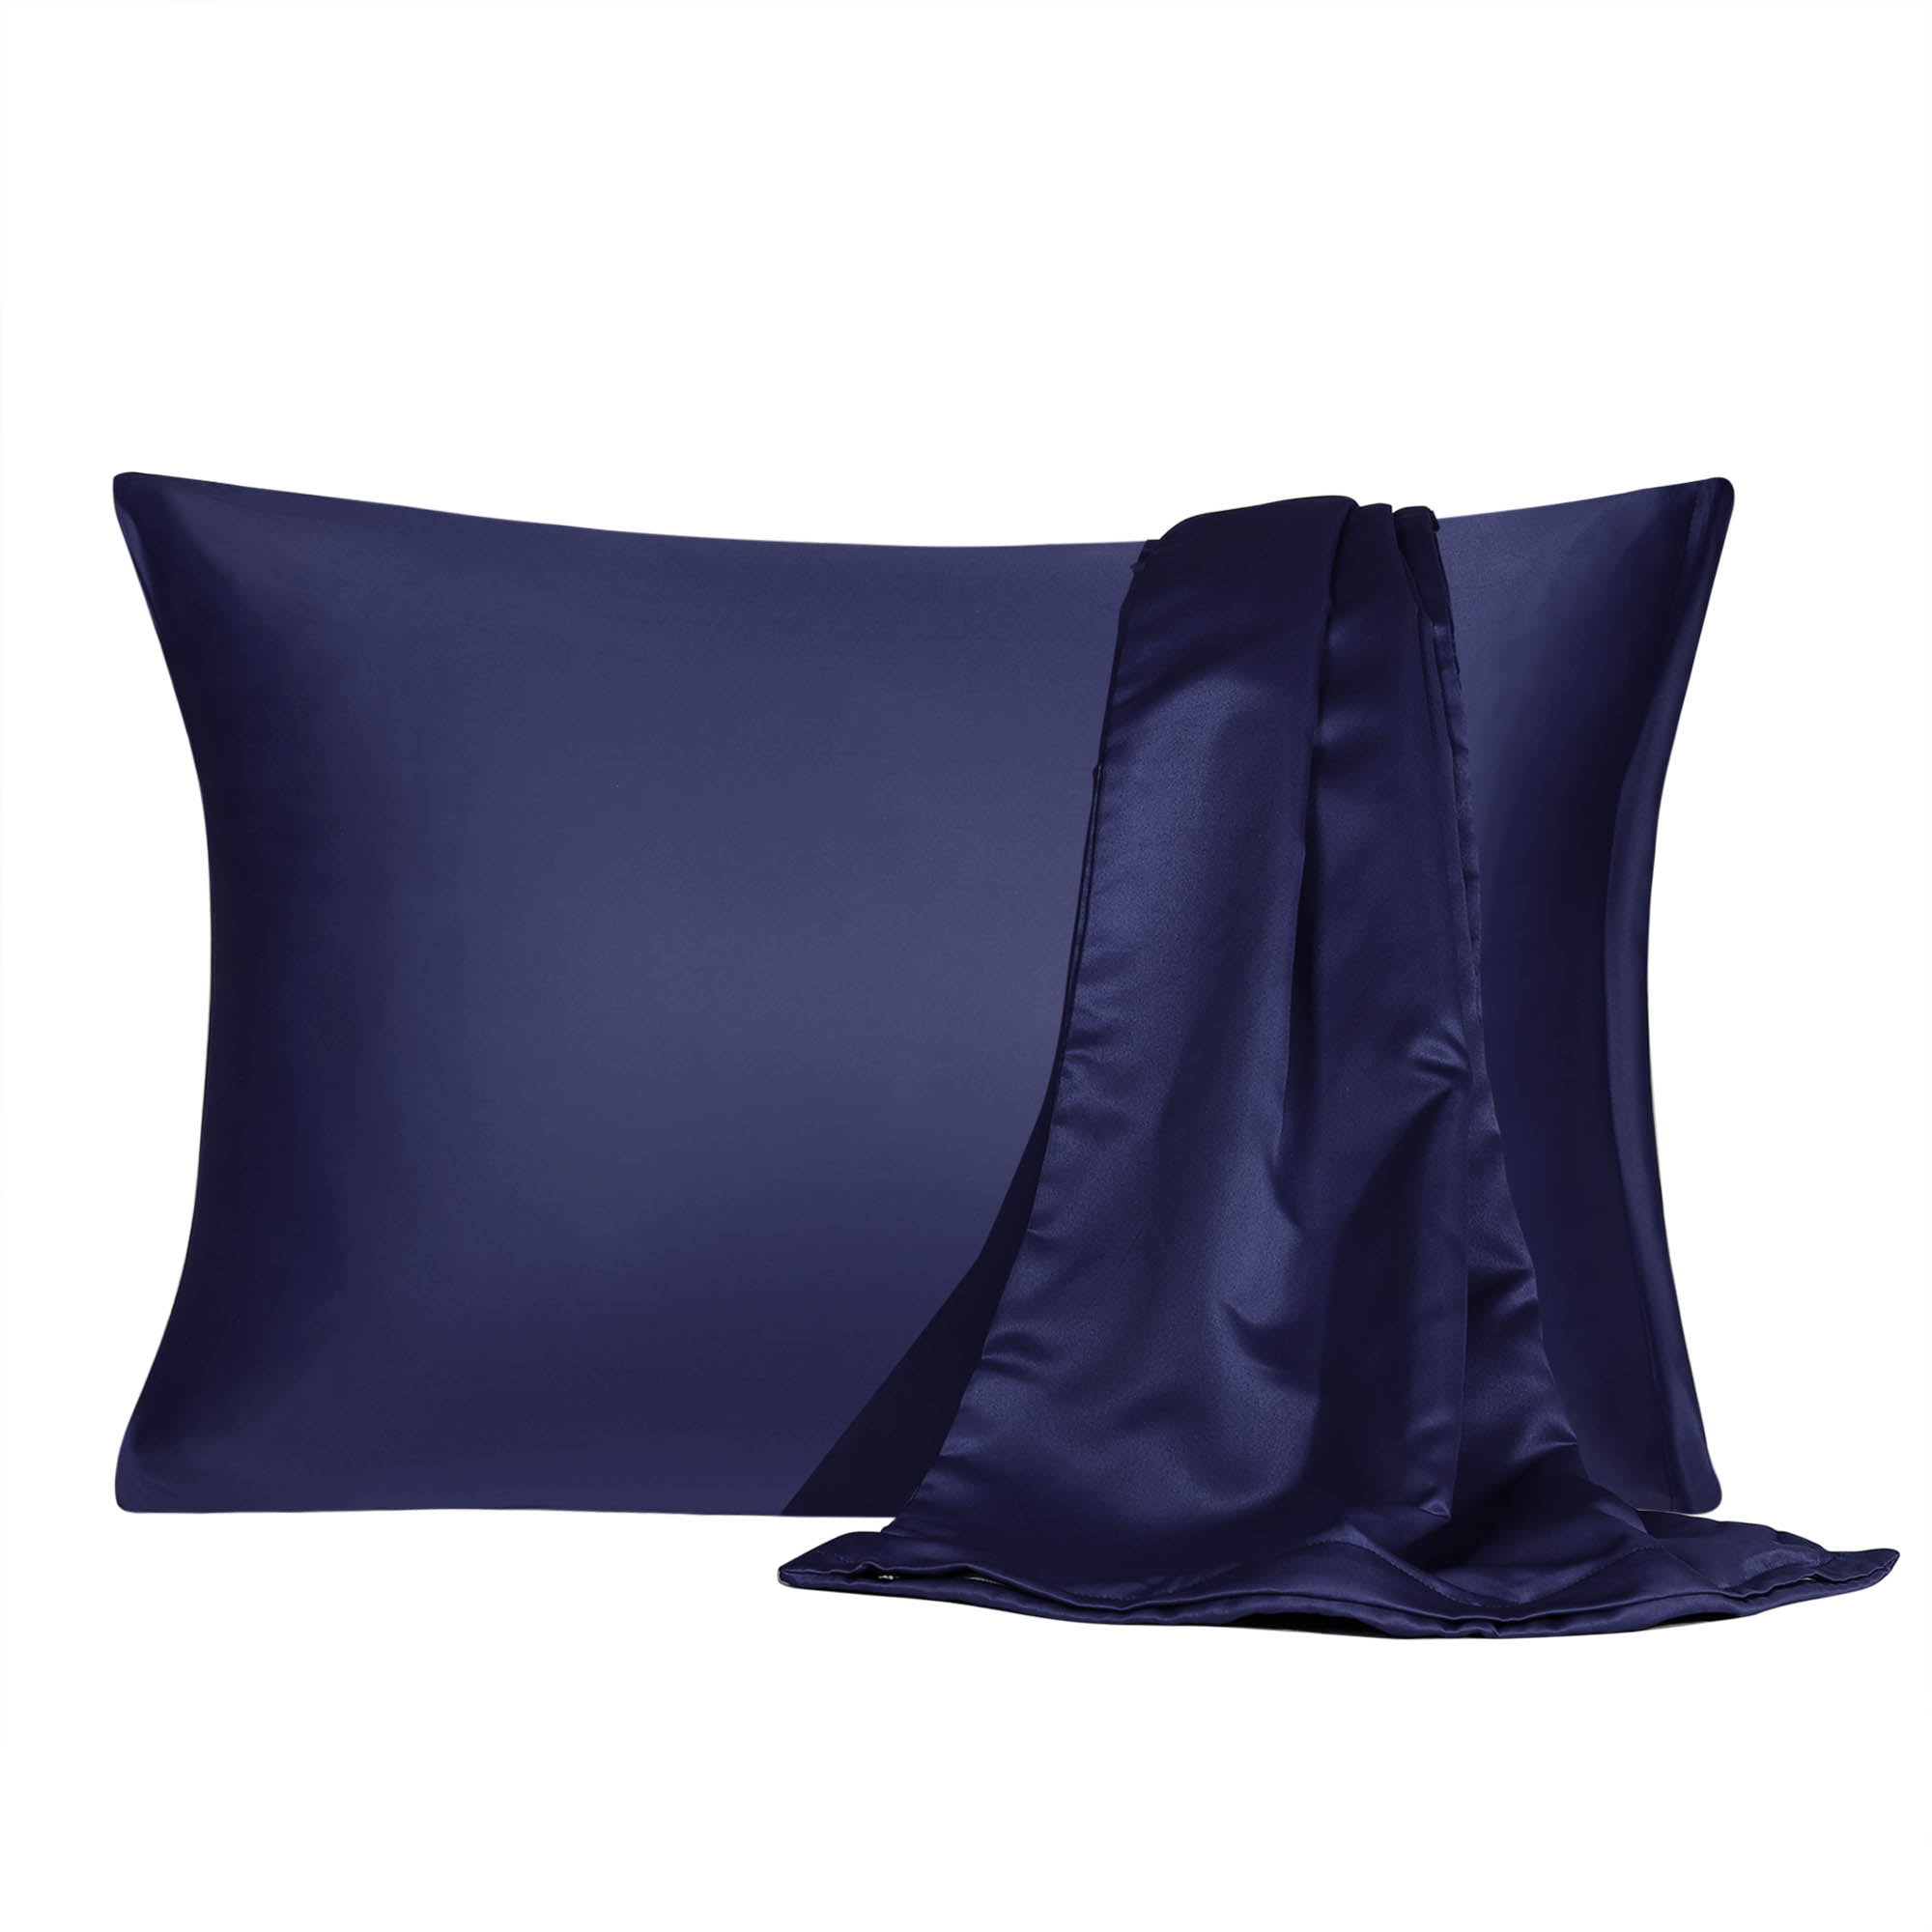 Details about   2Piece Satin Silk Pillowcase Pillow Case Cover King Queen Standard Cushion Cover 